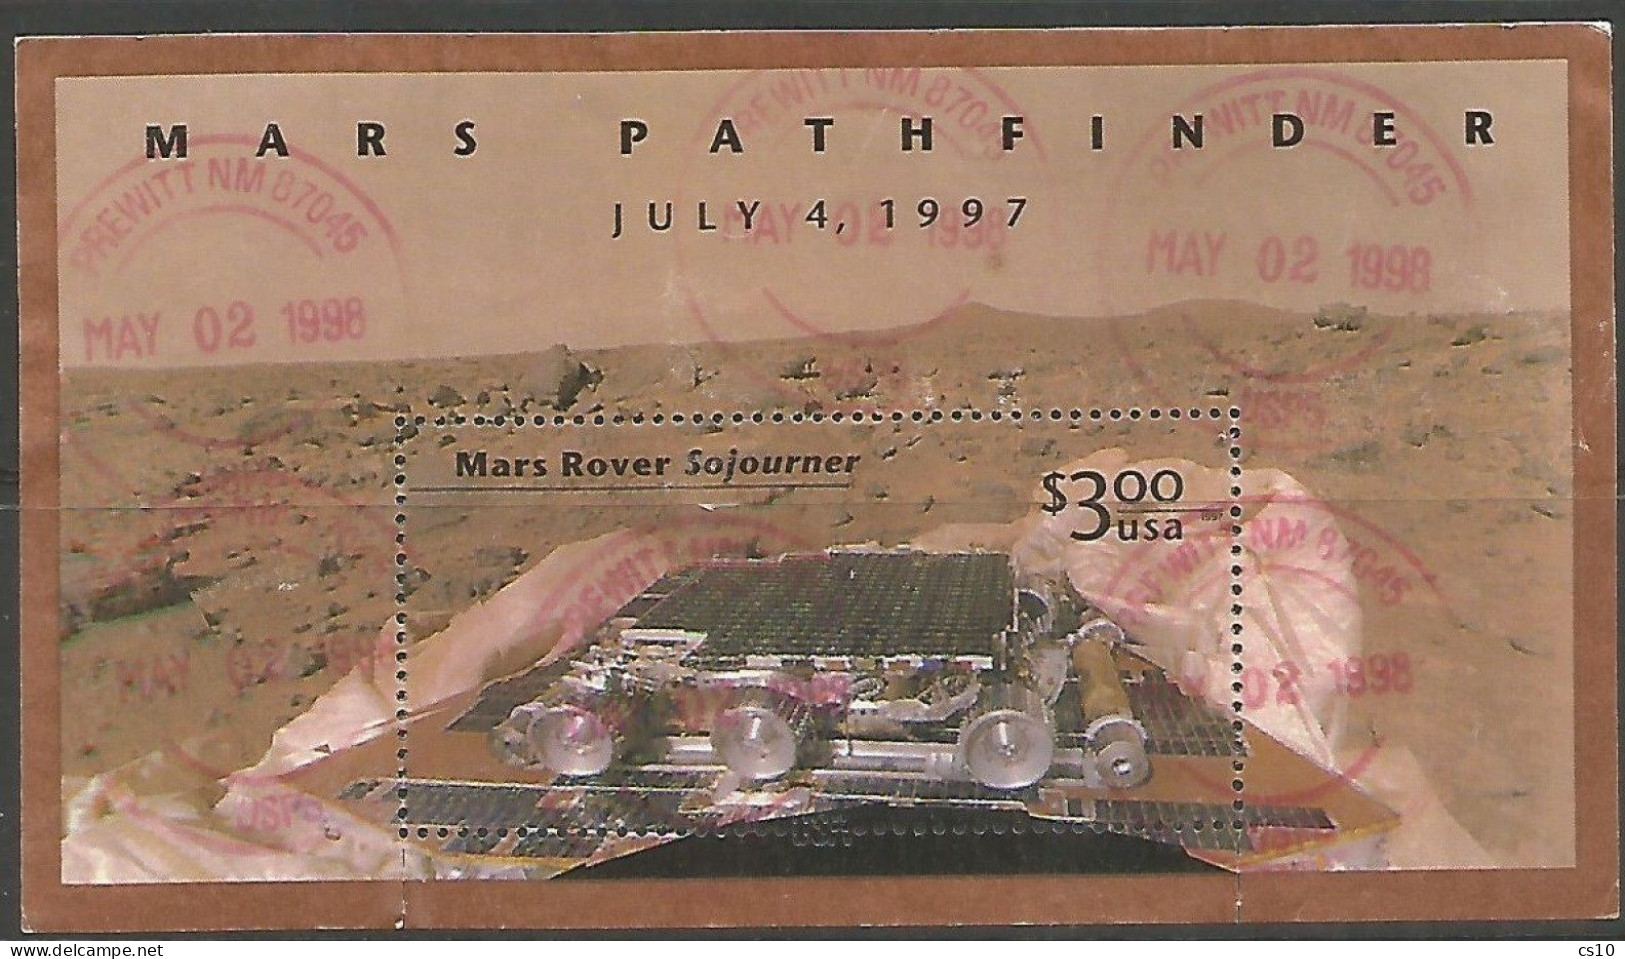 USA 1997 Mars Pathfinder SC.# 3178 S/S Postally Used (1998) Postally Used - VFU Condition - USA